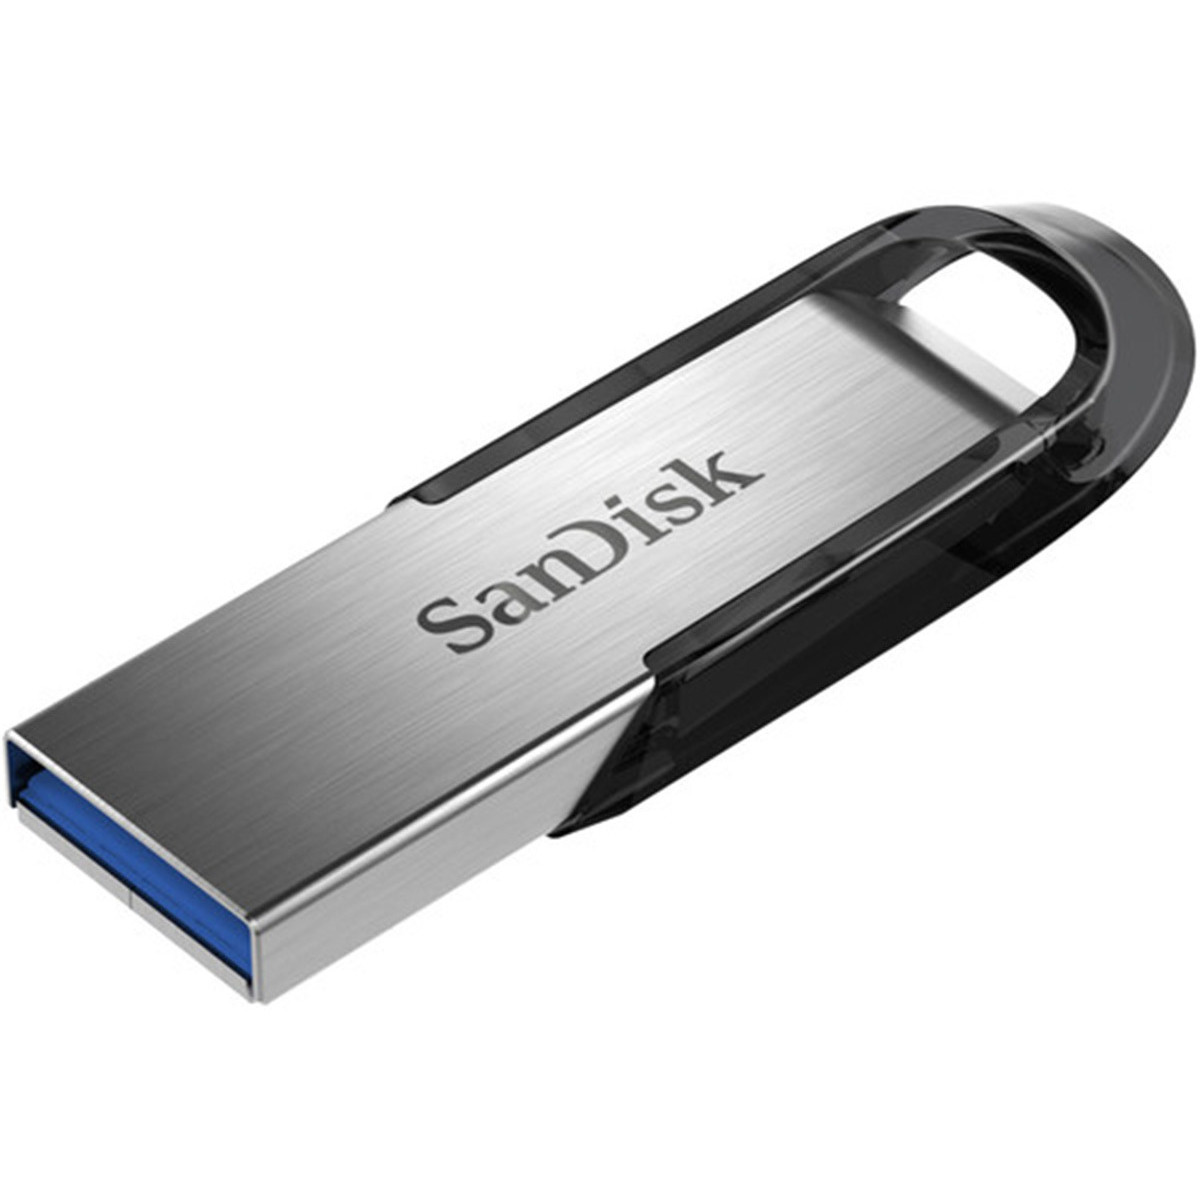 16Go Clé USB-Sandisk 3.0 - Nimbuz Store